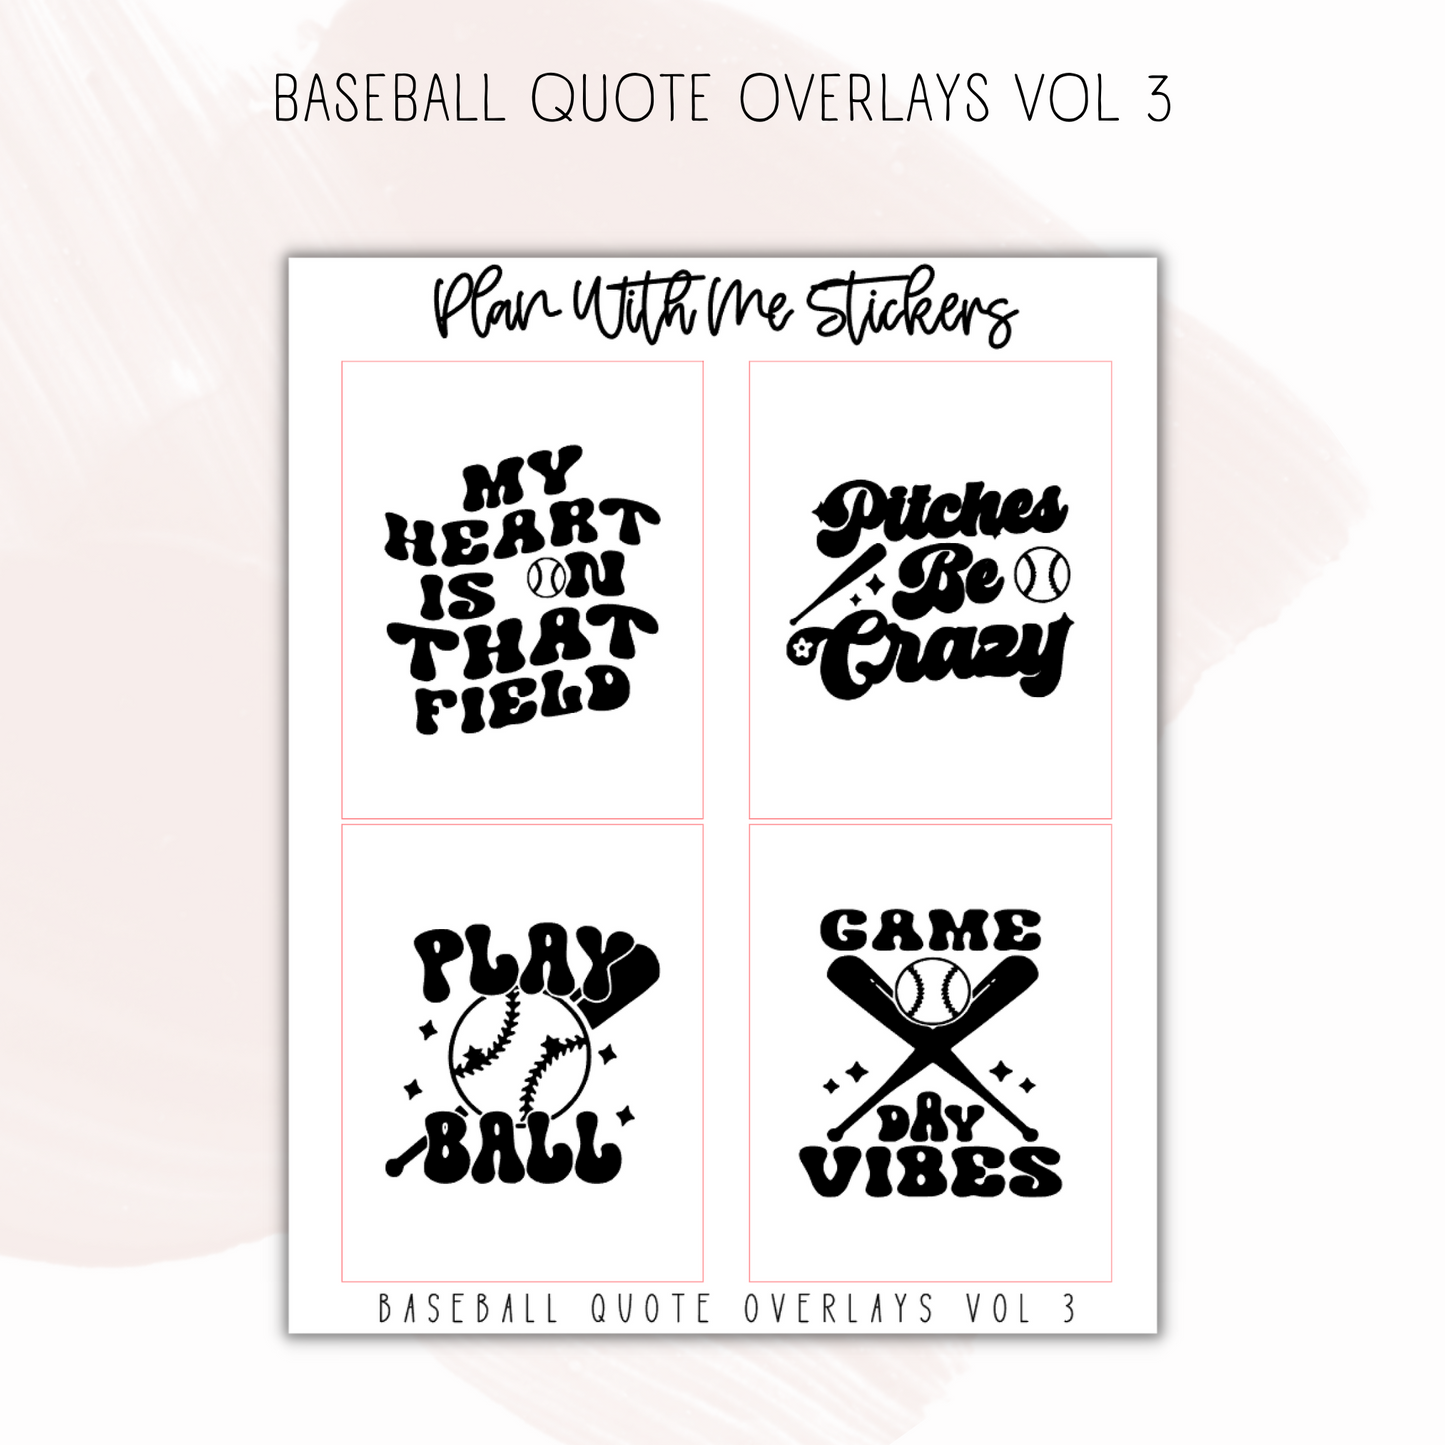 Baseball Quote Overlays Vol 3